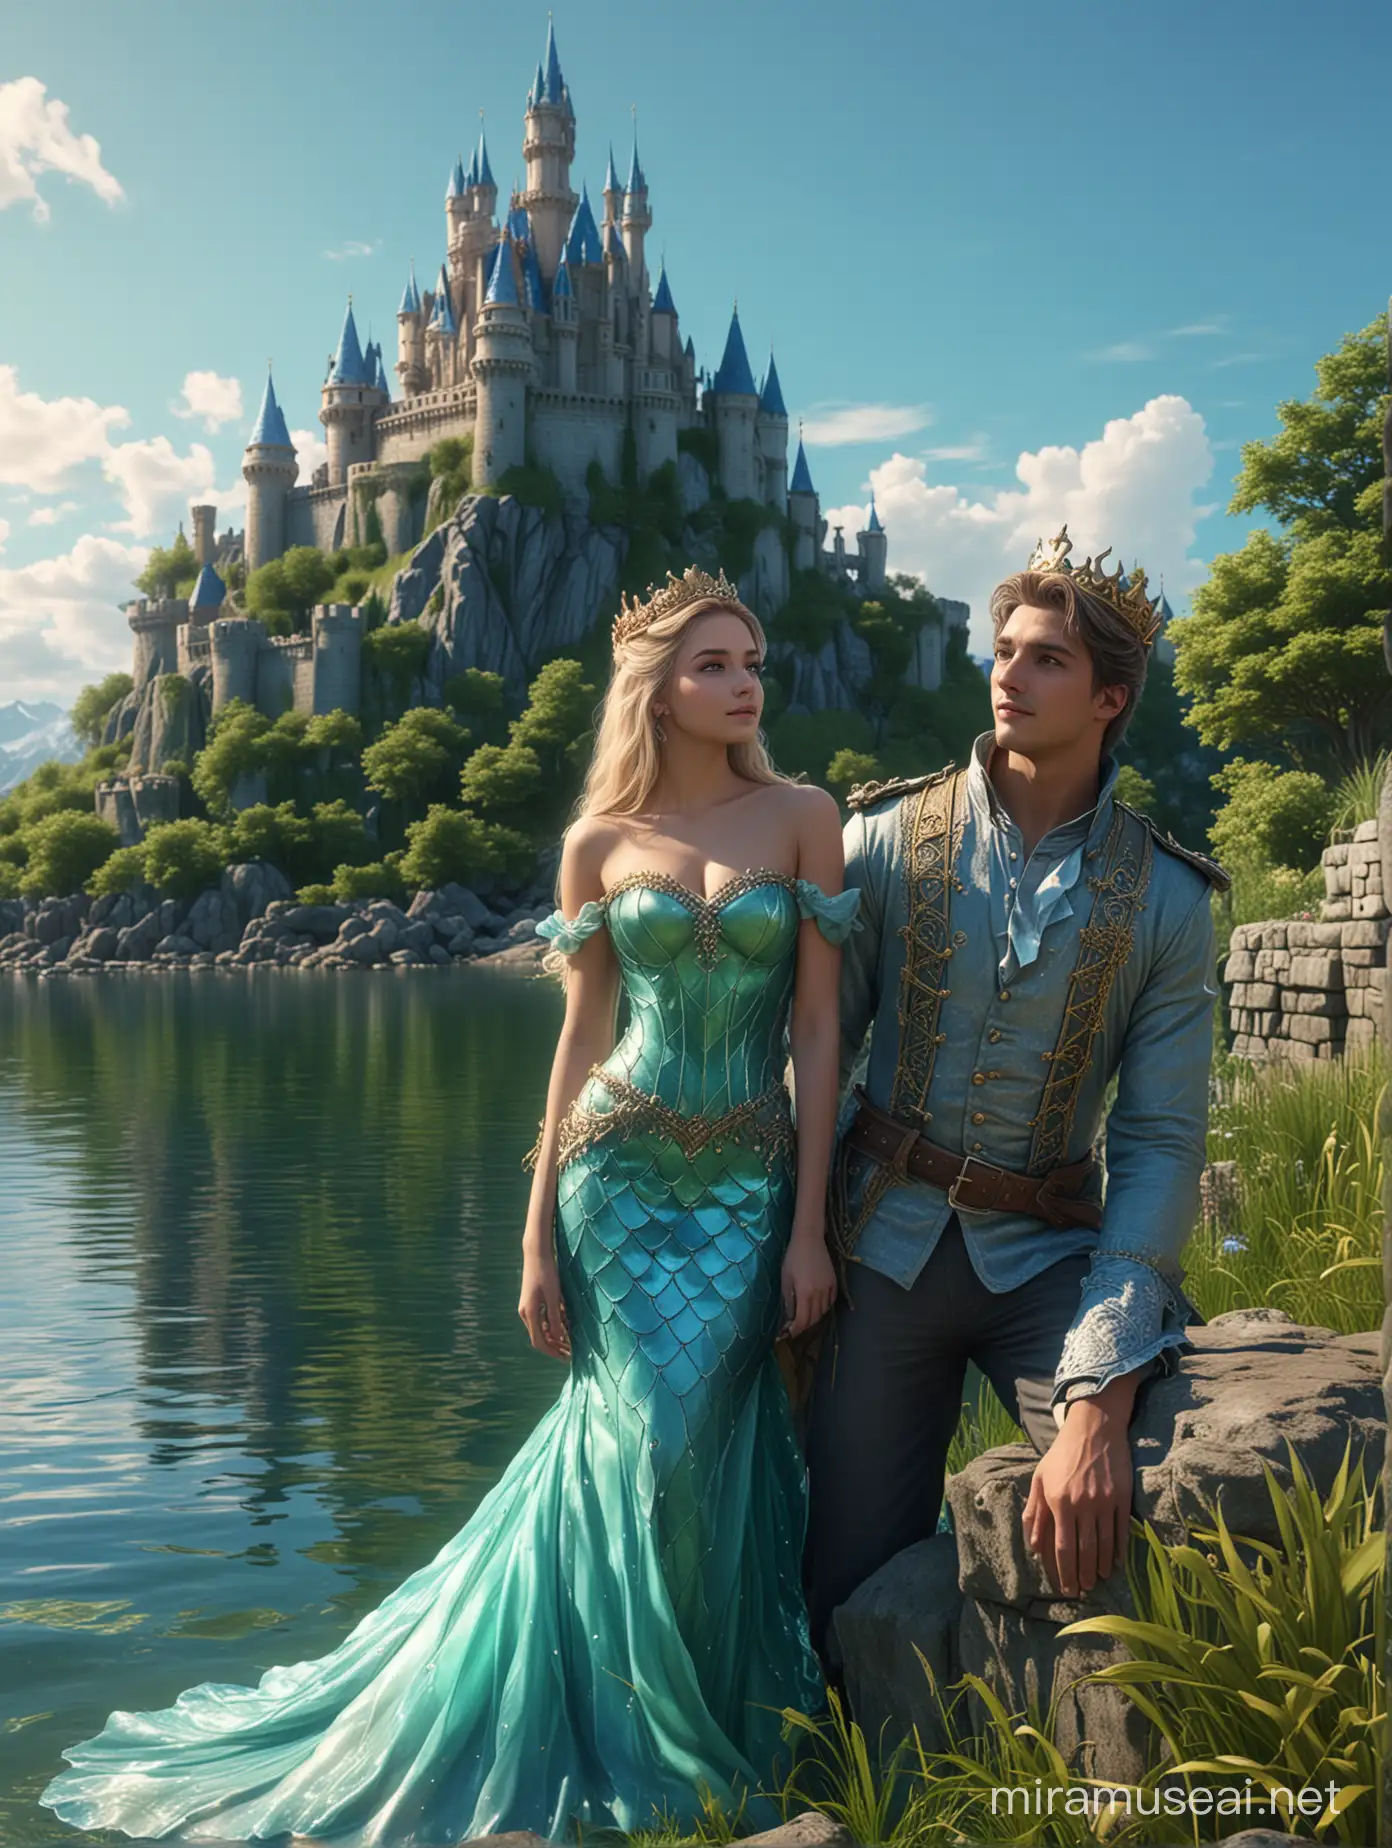 seorang pria sangat tampan berusia 20 tahun, sedang bersandar di sebelah putri duyung cantik bermahkota, terlihat castile dan menara, latar belakang rumput hijau, danau biru, langit biru dan castile. Ultra realistik, 64k